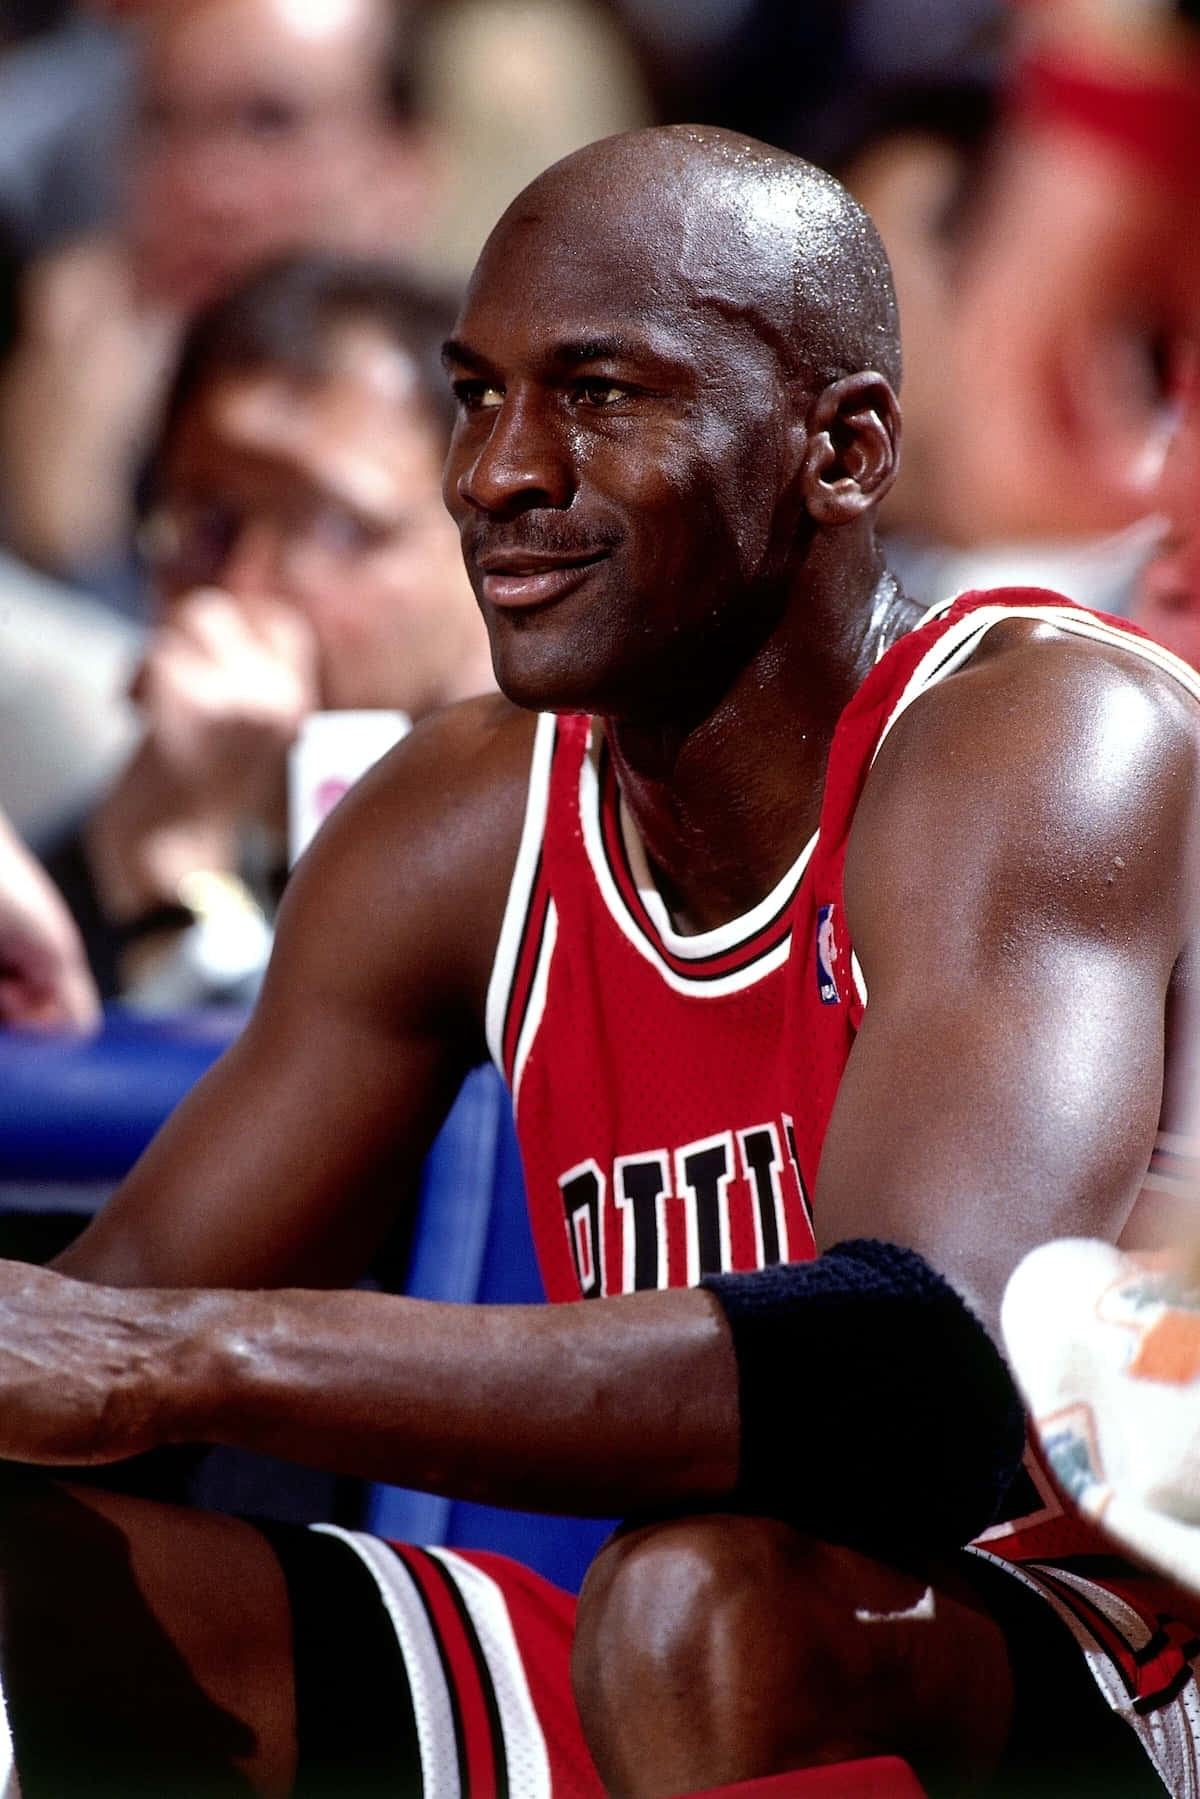 Iconischerbasketballstar Michael Jordan